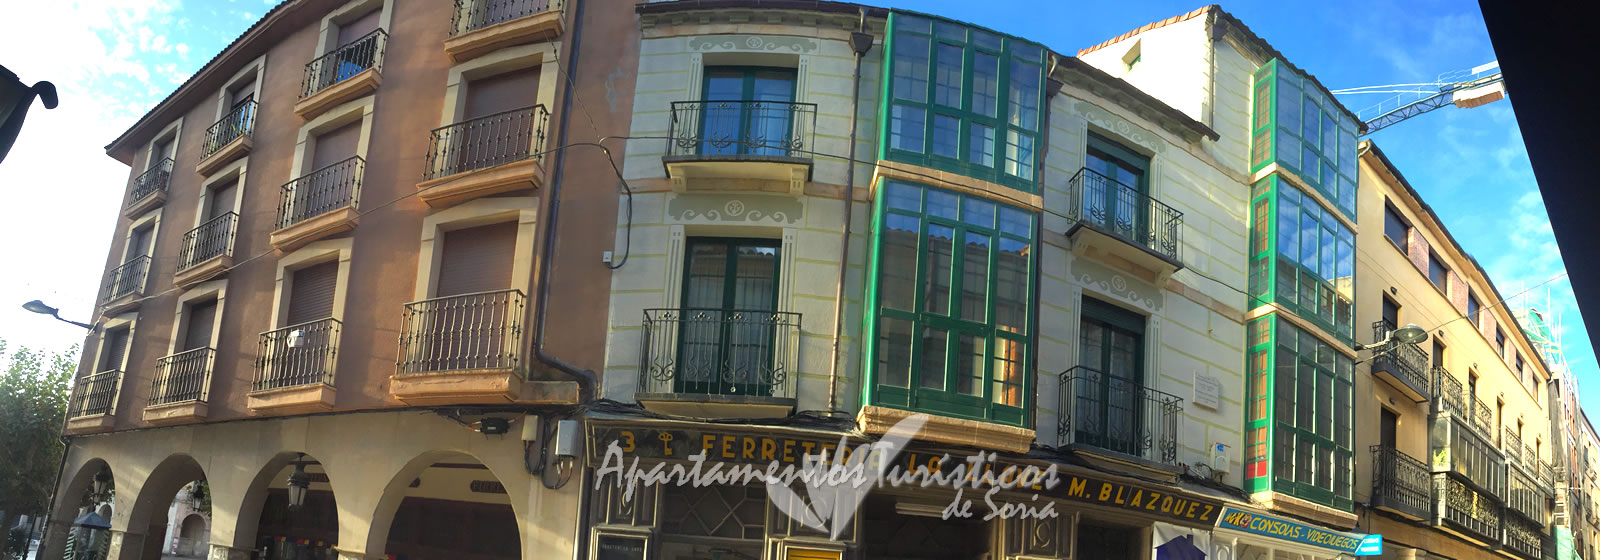 Apartamentos Turísticos de Soria